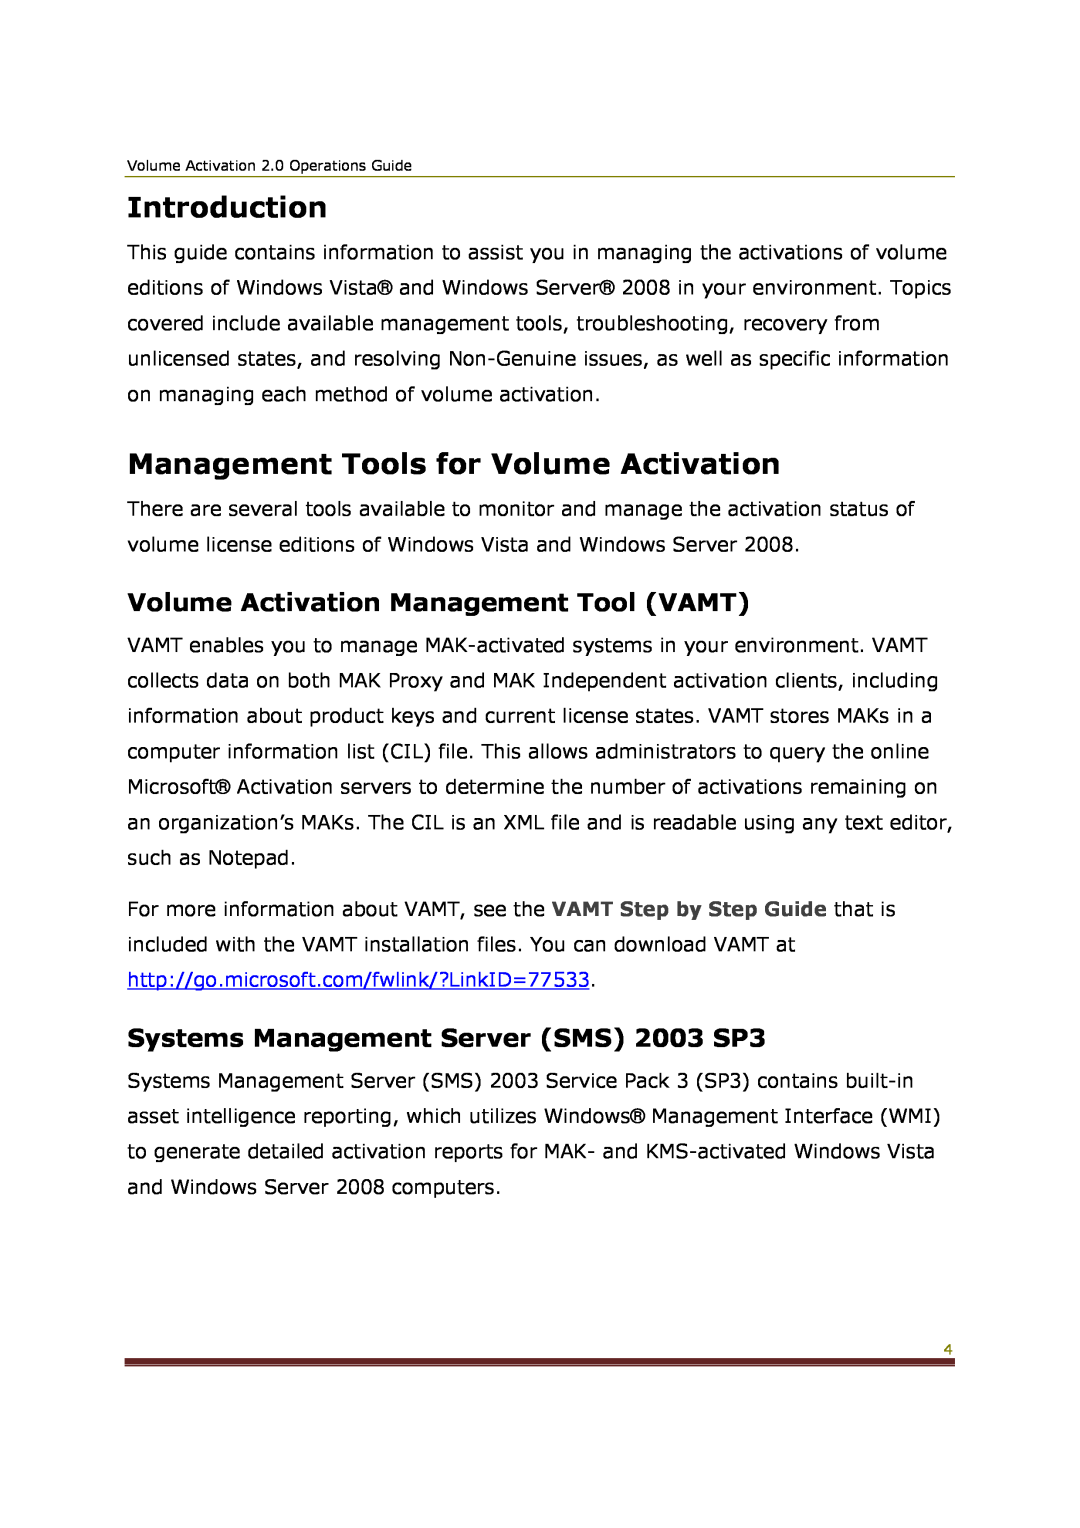 Microsoft 2 manual Introduction, Management Tools for Volume Activation, Volume Activation Management Tool VAMT 